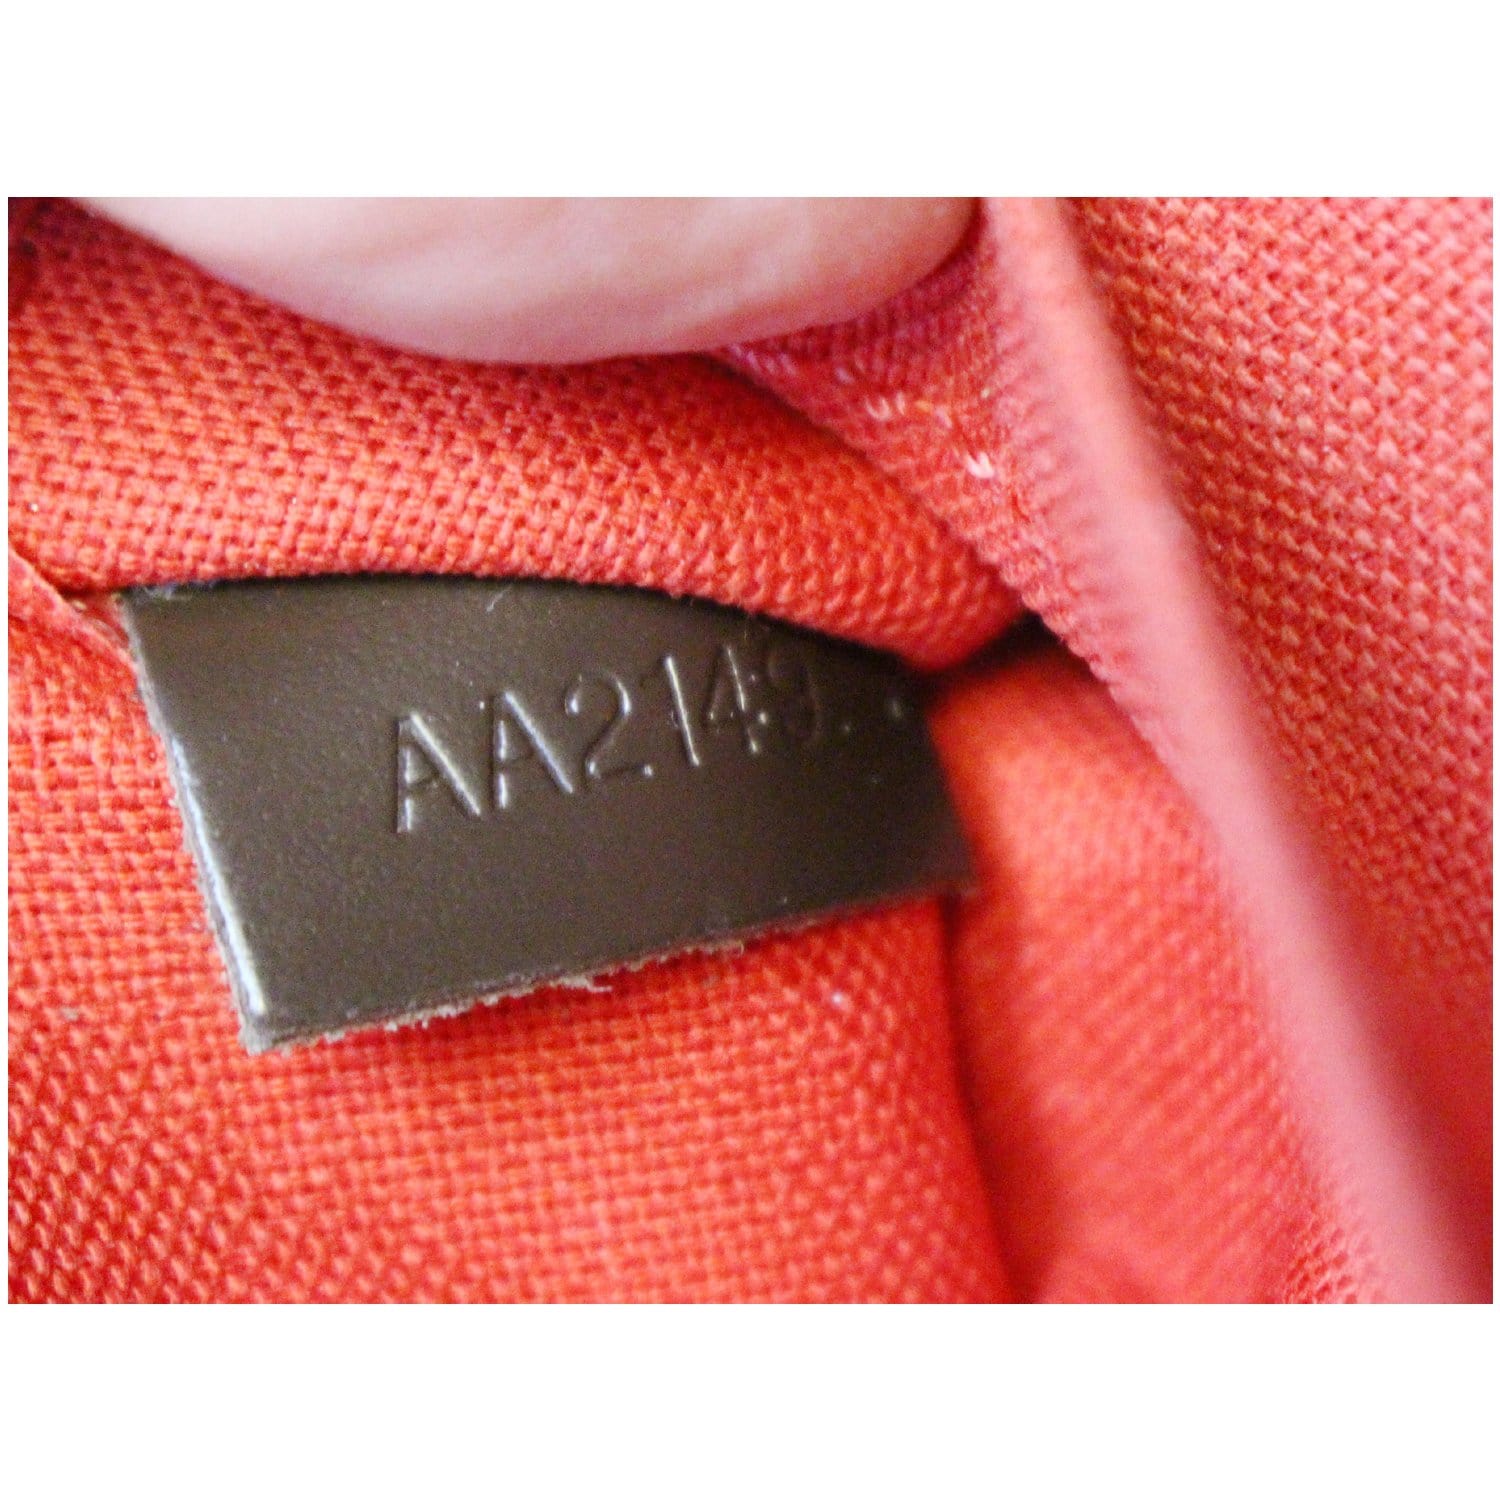 bb Lxr Louis Vuitton Alma Bb Bandouliere Crossbody Bag, Express